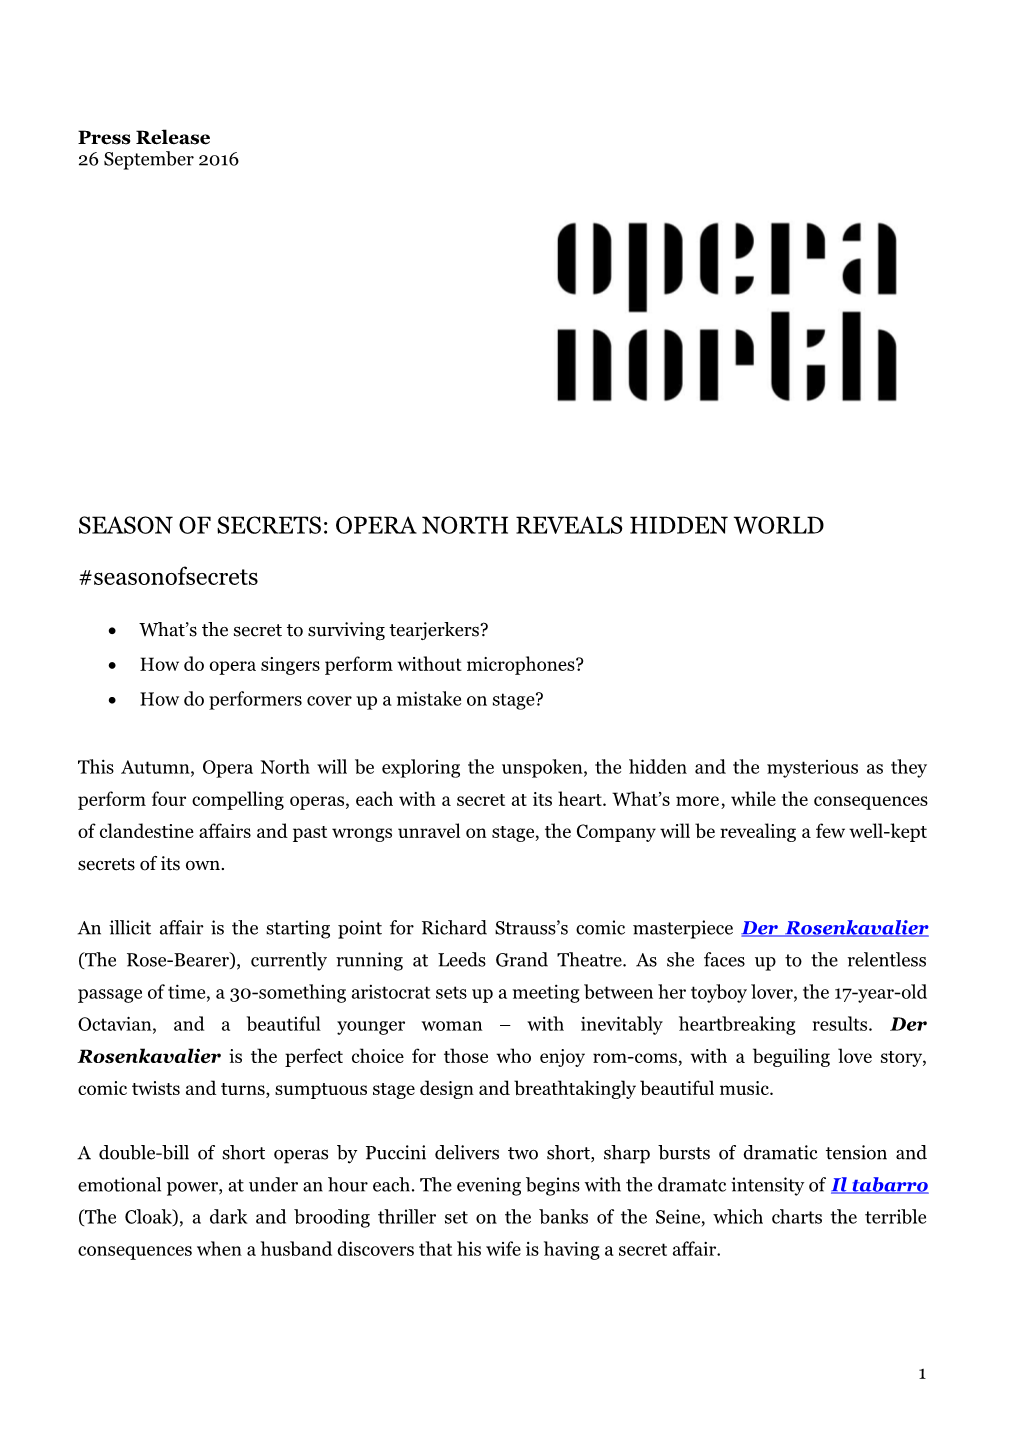 Season of Secrets: Opera North Reveals Hidden World